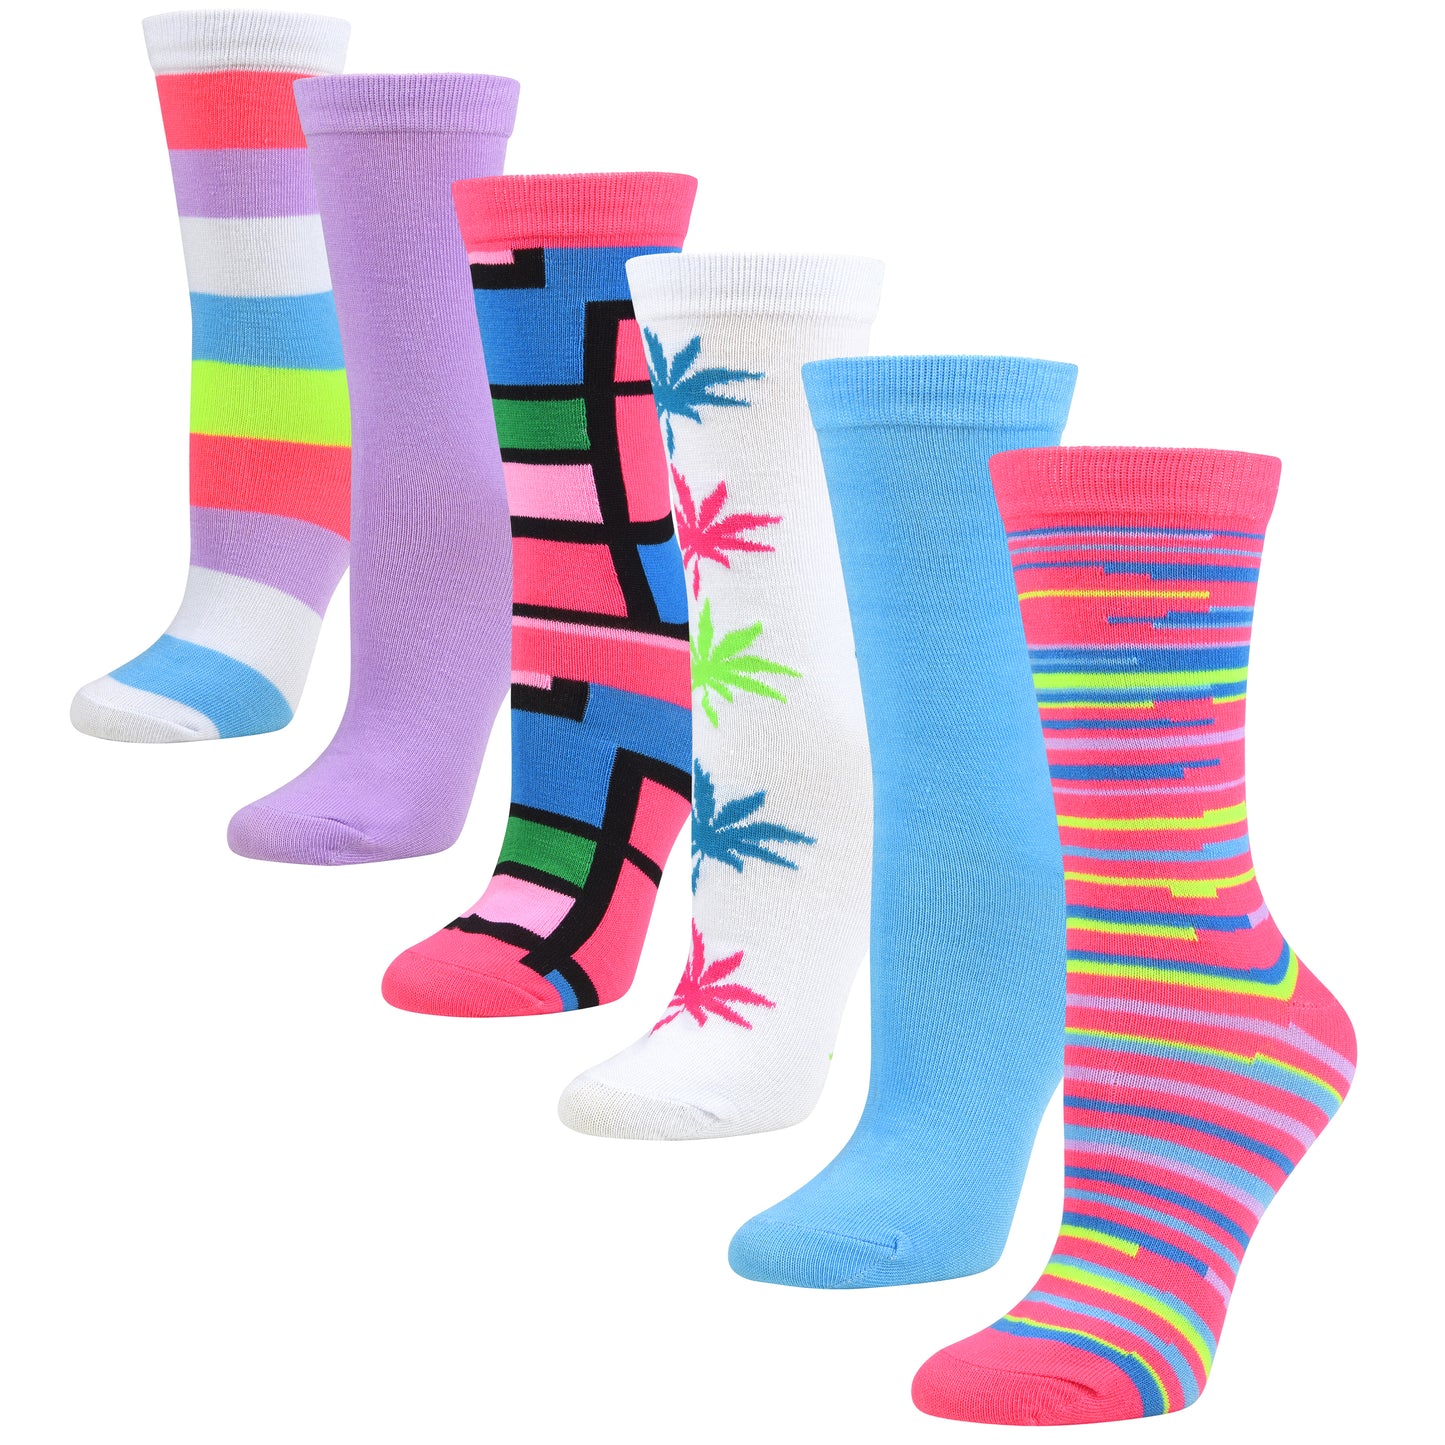 Womens Dress Socks - Colorful Crew 6/12 Pairs